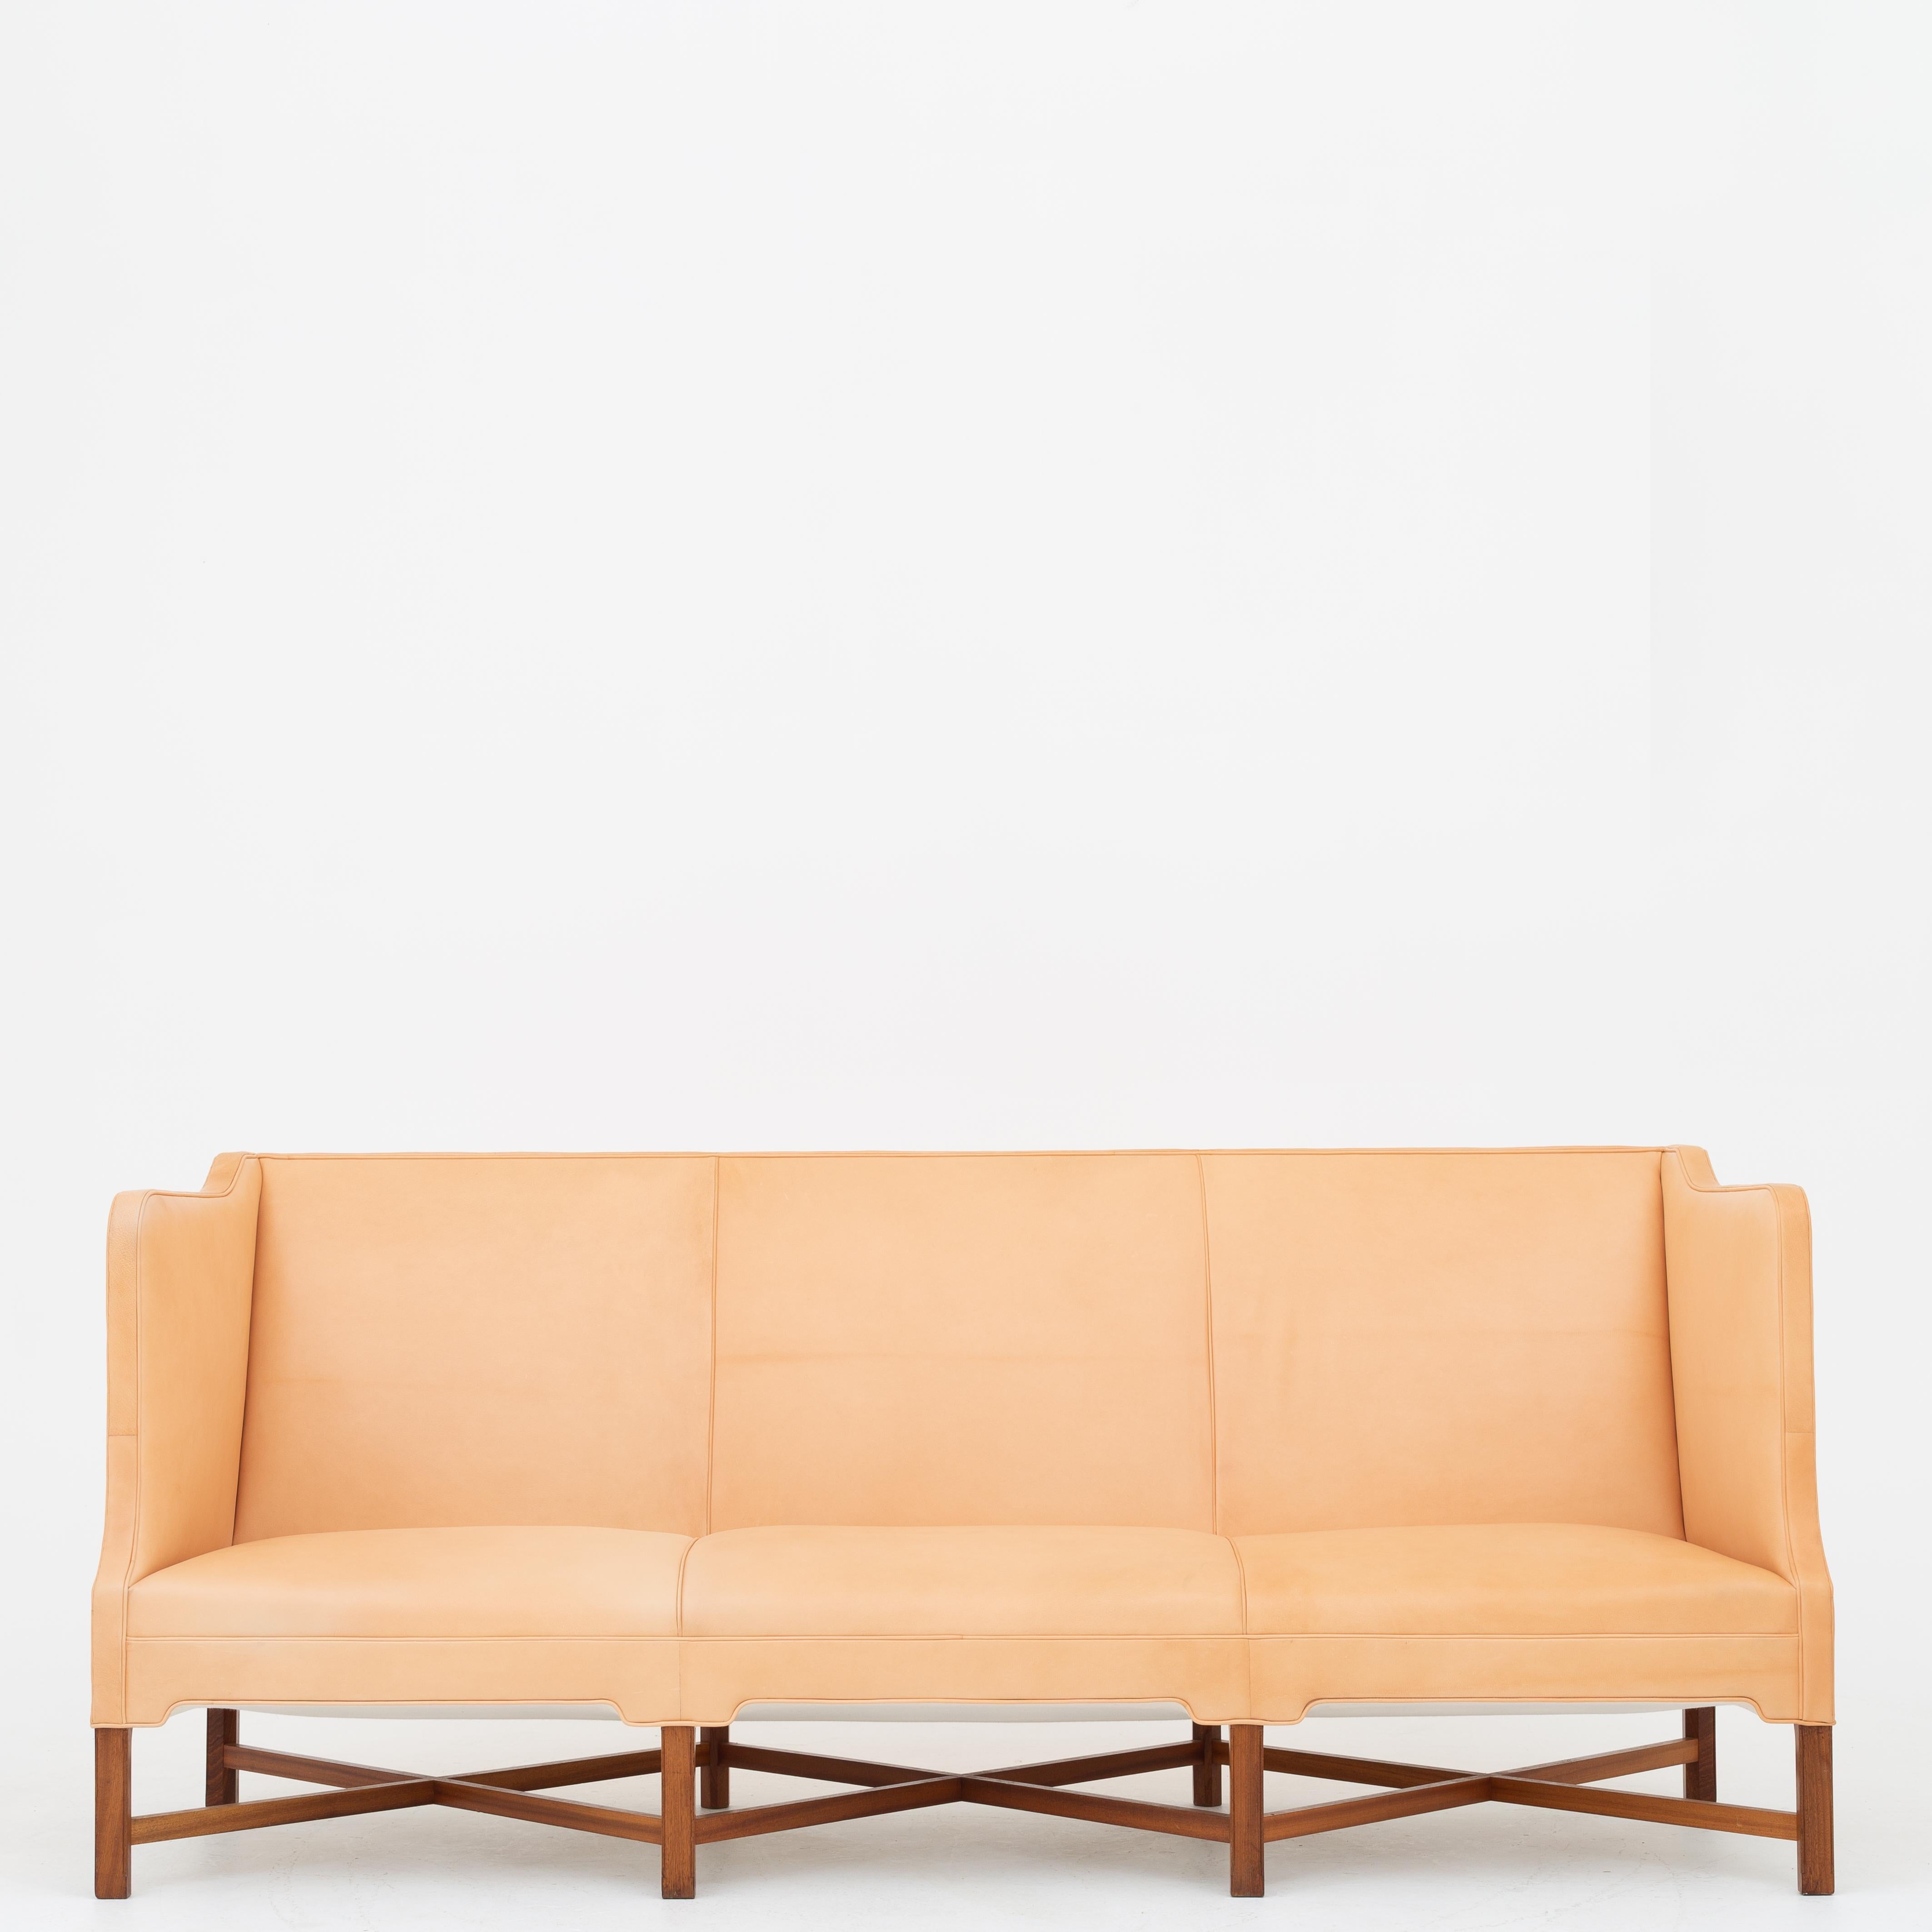 KK 4118 3-Seat Sofa in Niger Leather by Kaare Klint 1